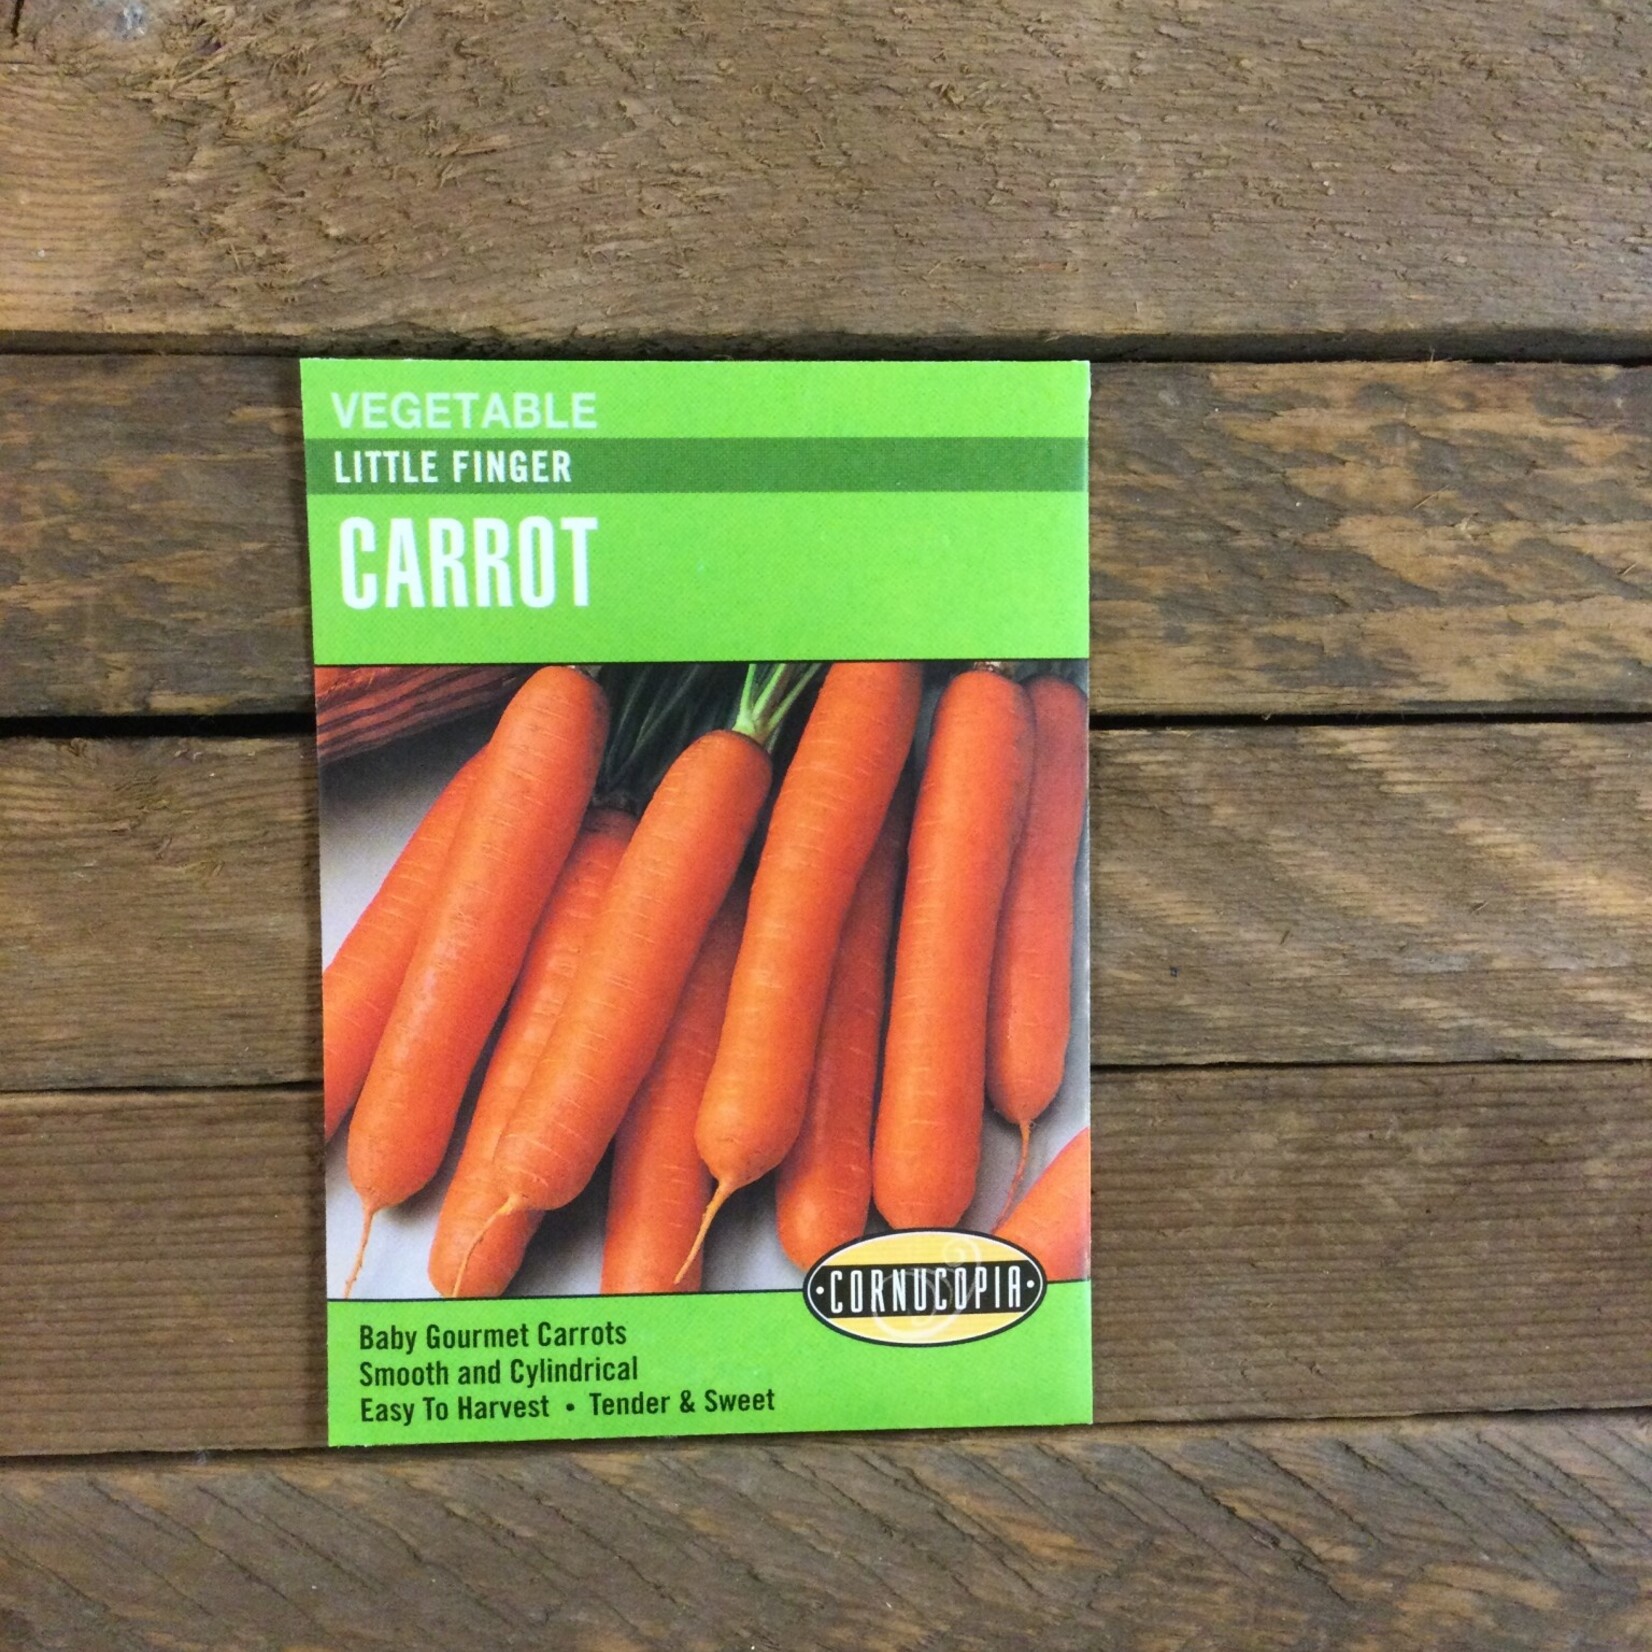 Cornucopia Carrot 'Little Finger' Seeds